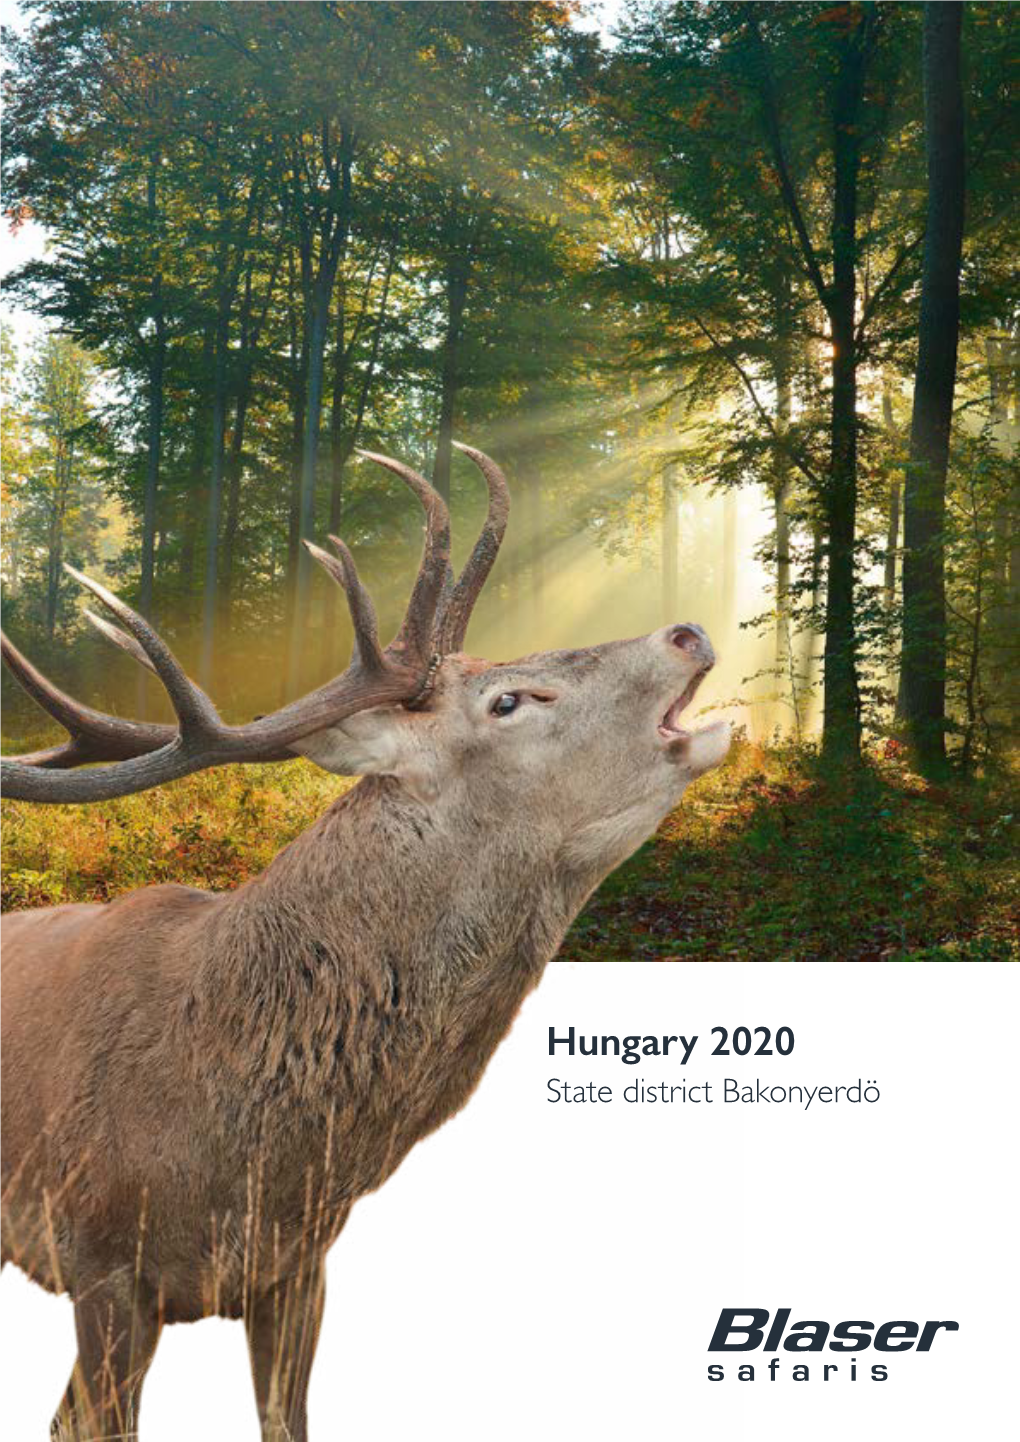 Hungary 2020 State District Bakonyerdö